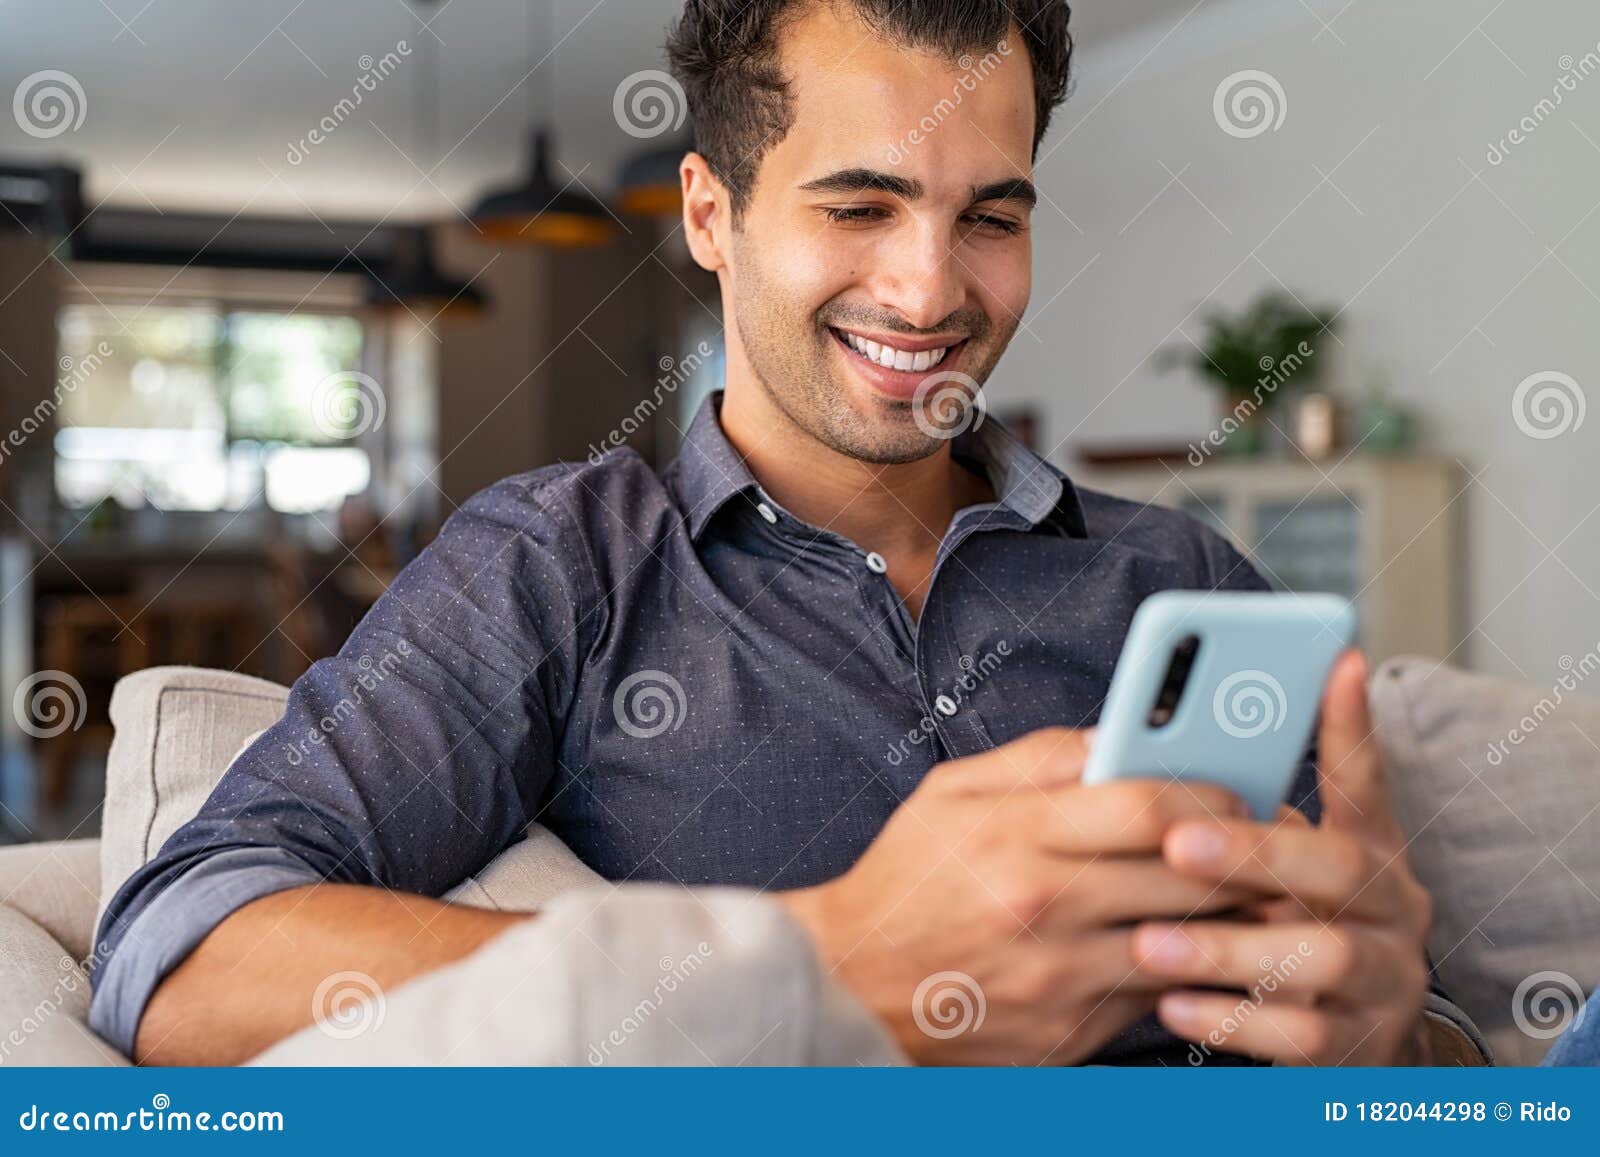 latin man using smartphone at home